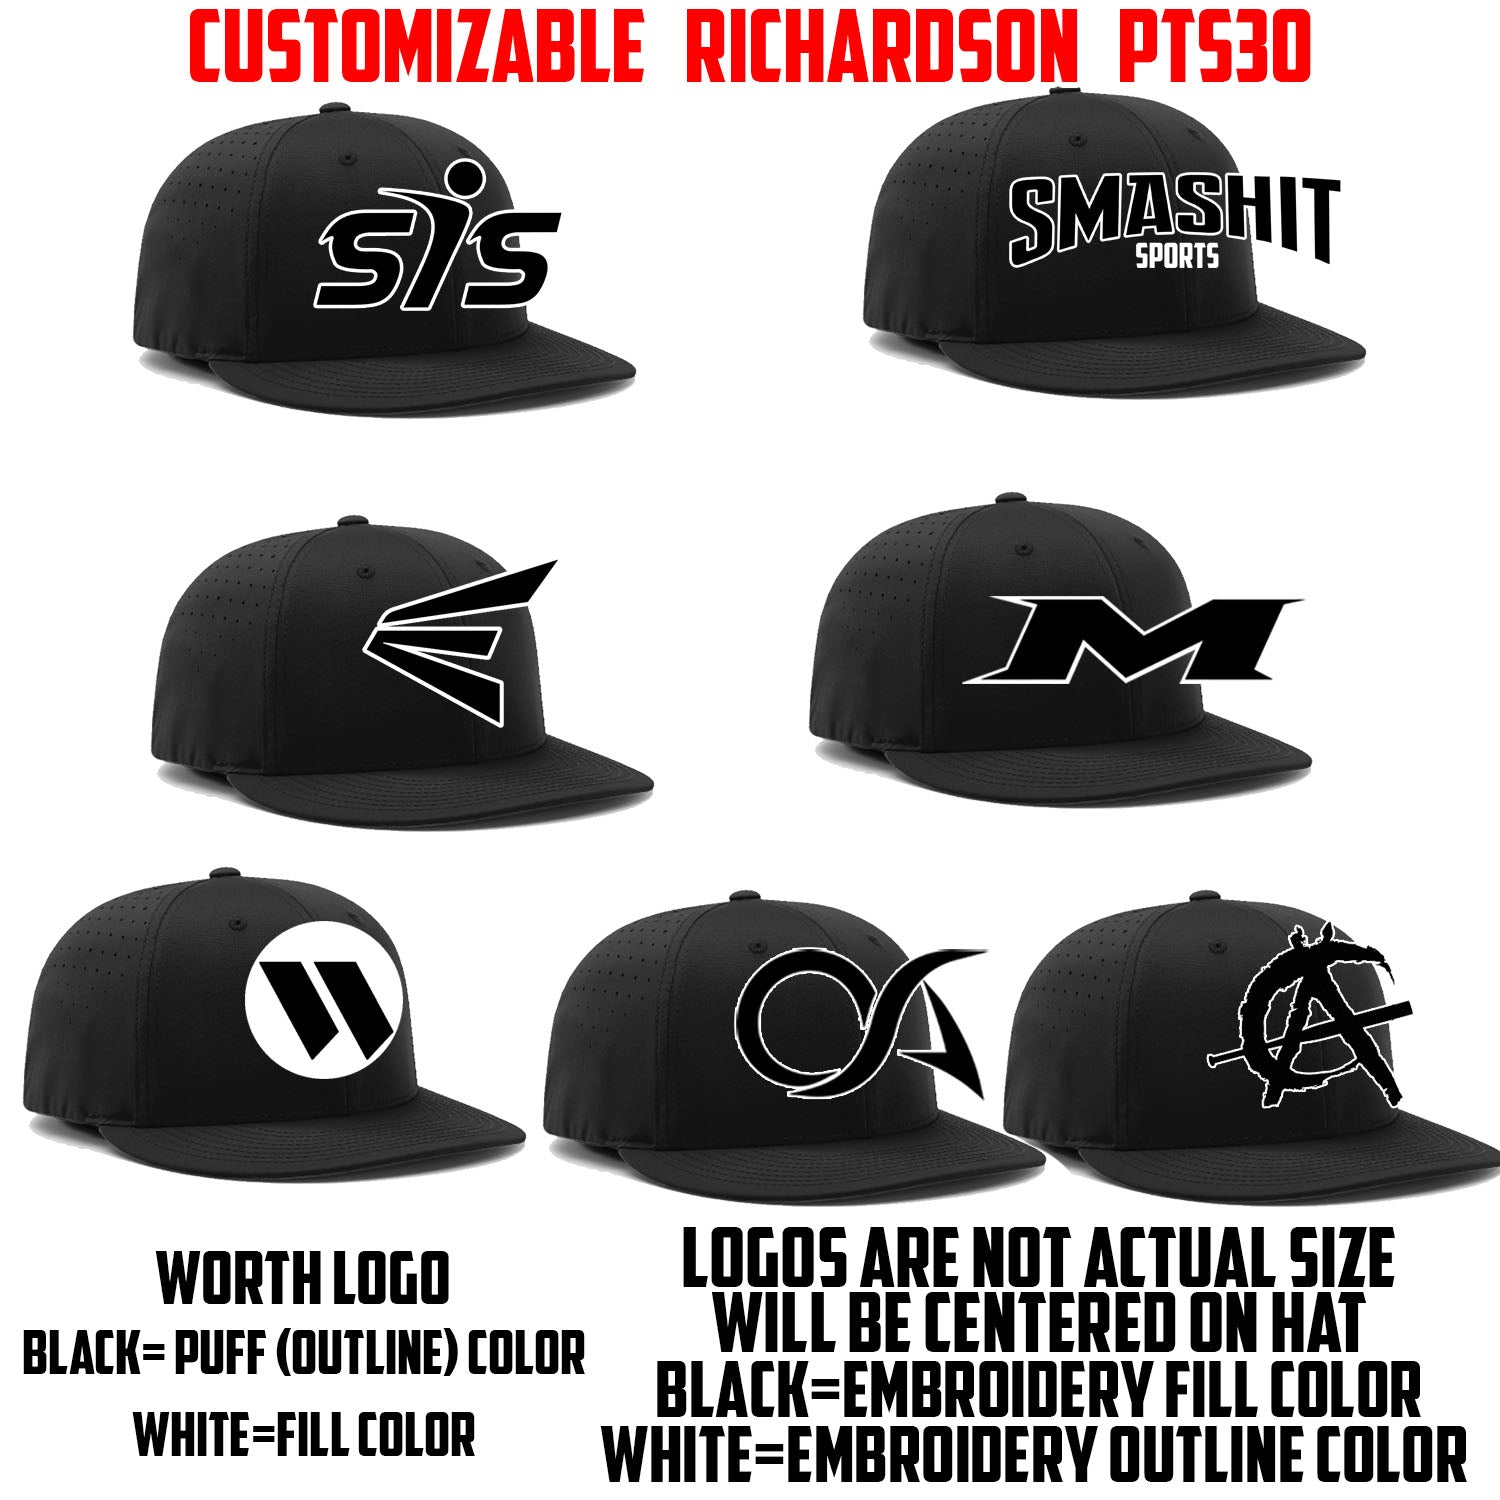 Customizable Logo Hat by Richardson (BLACK PTS30)